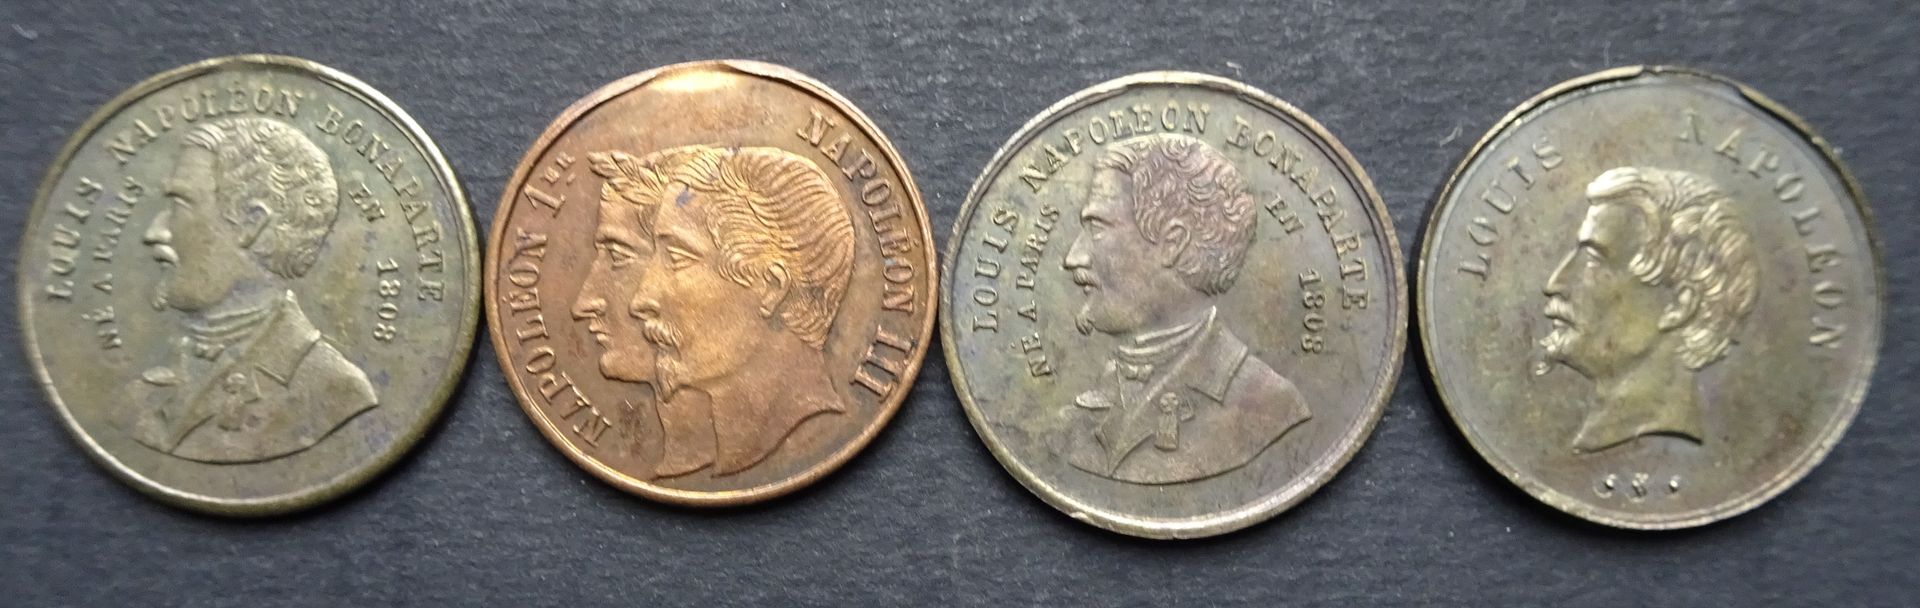 Null 2枚拿破仑三世的普选奖章+1枚拿破仑三世的奖章+1853年8月15日与拿破仑的奖章。
这套纪念章共有4枚。